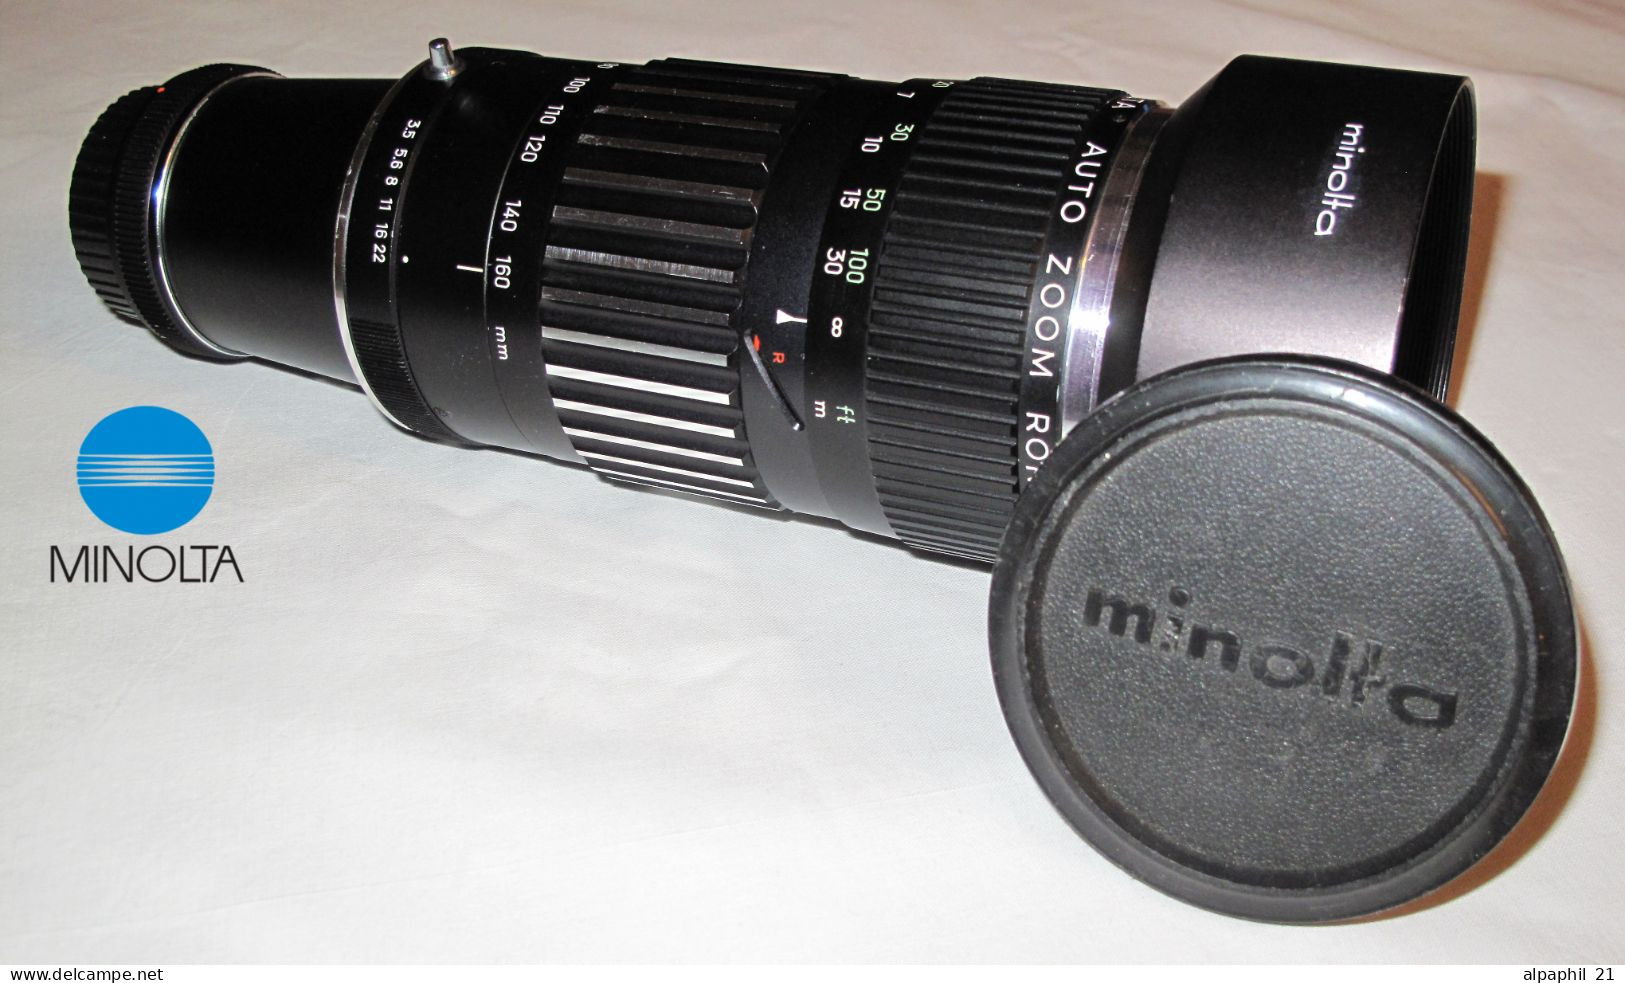 Minolta Rokkor Zoom Lens F3.5, 80-160 Mm - Lenti